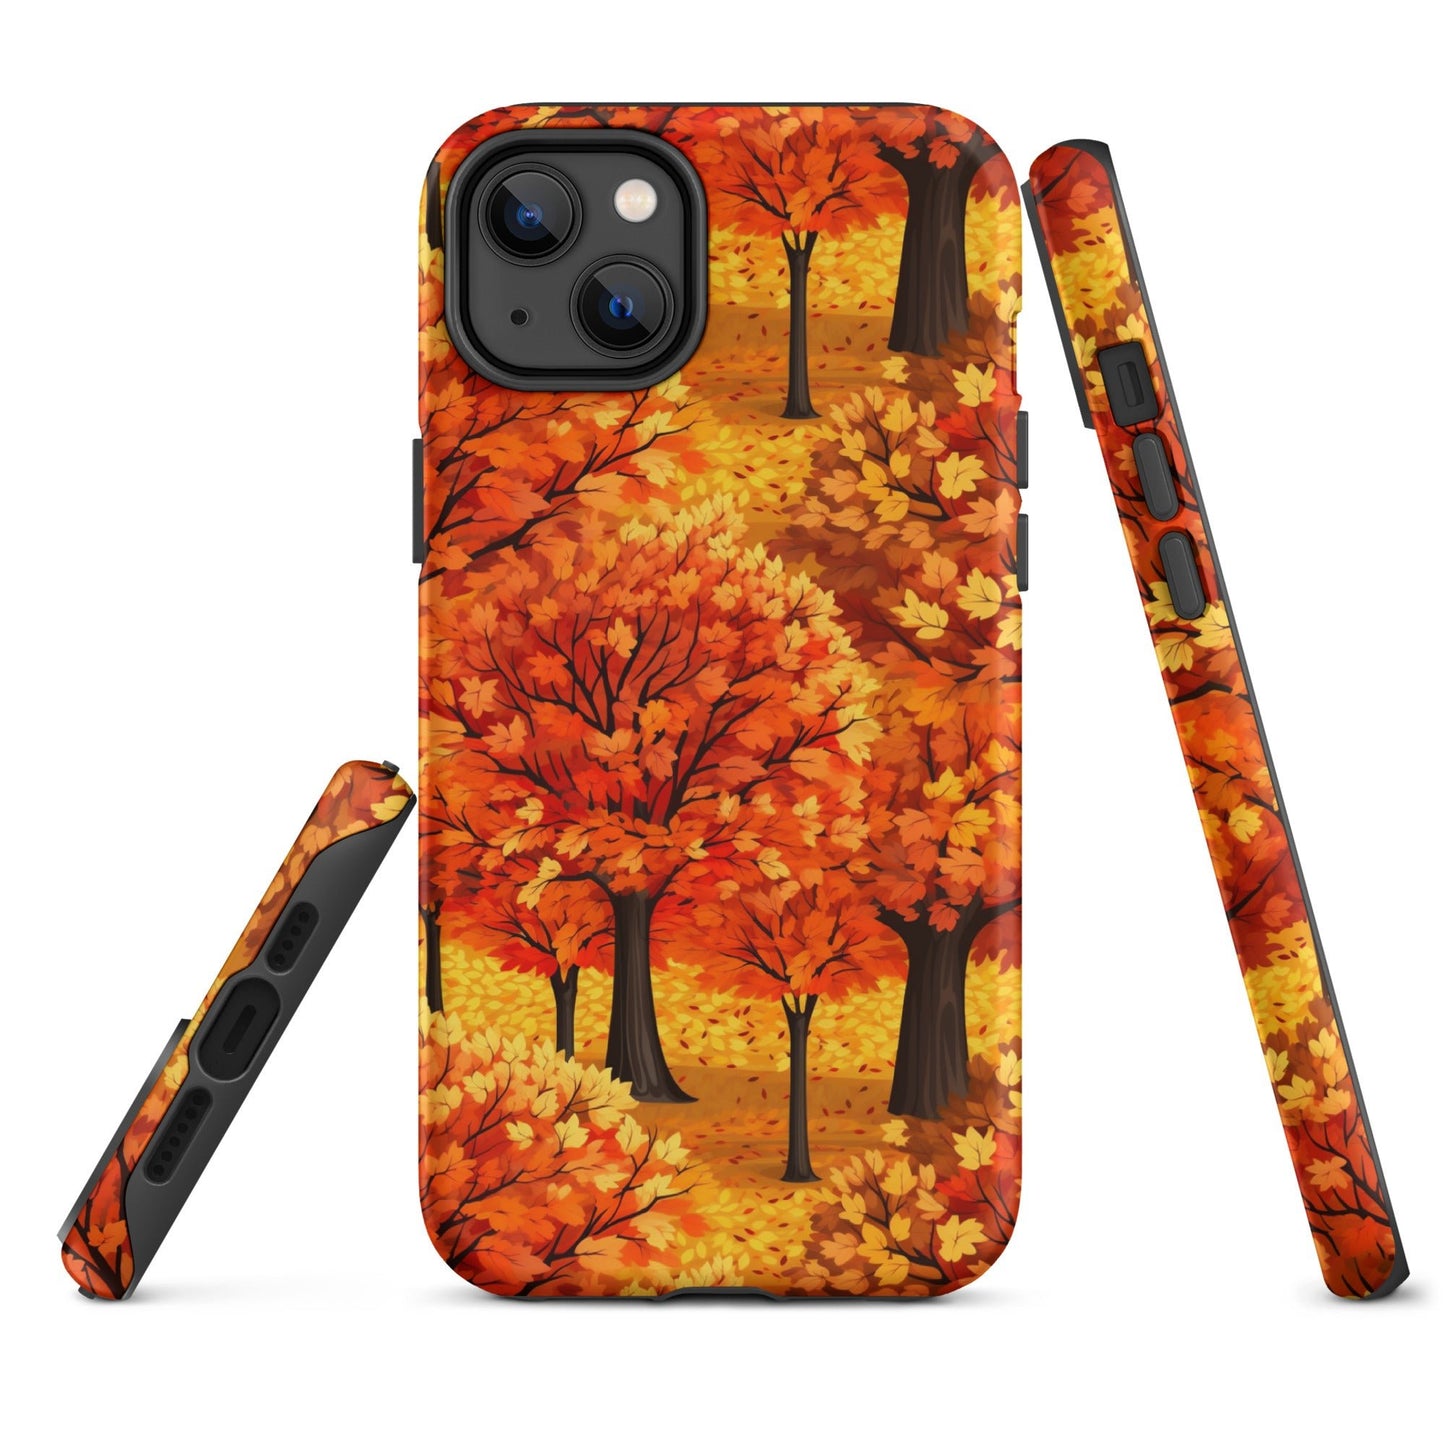 Impasto-Style Woodlands - High-Contrast Autumn Foliage - iPhone Case - Pattern Symphony